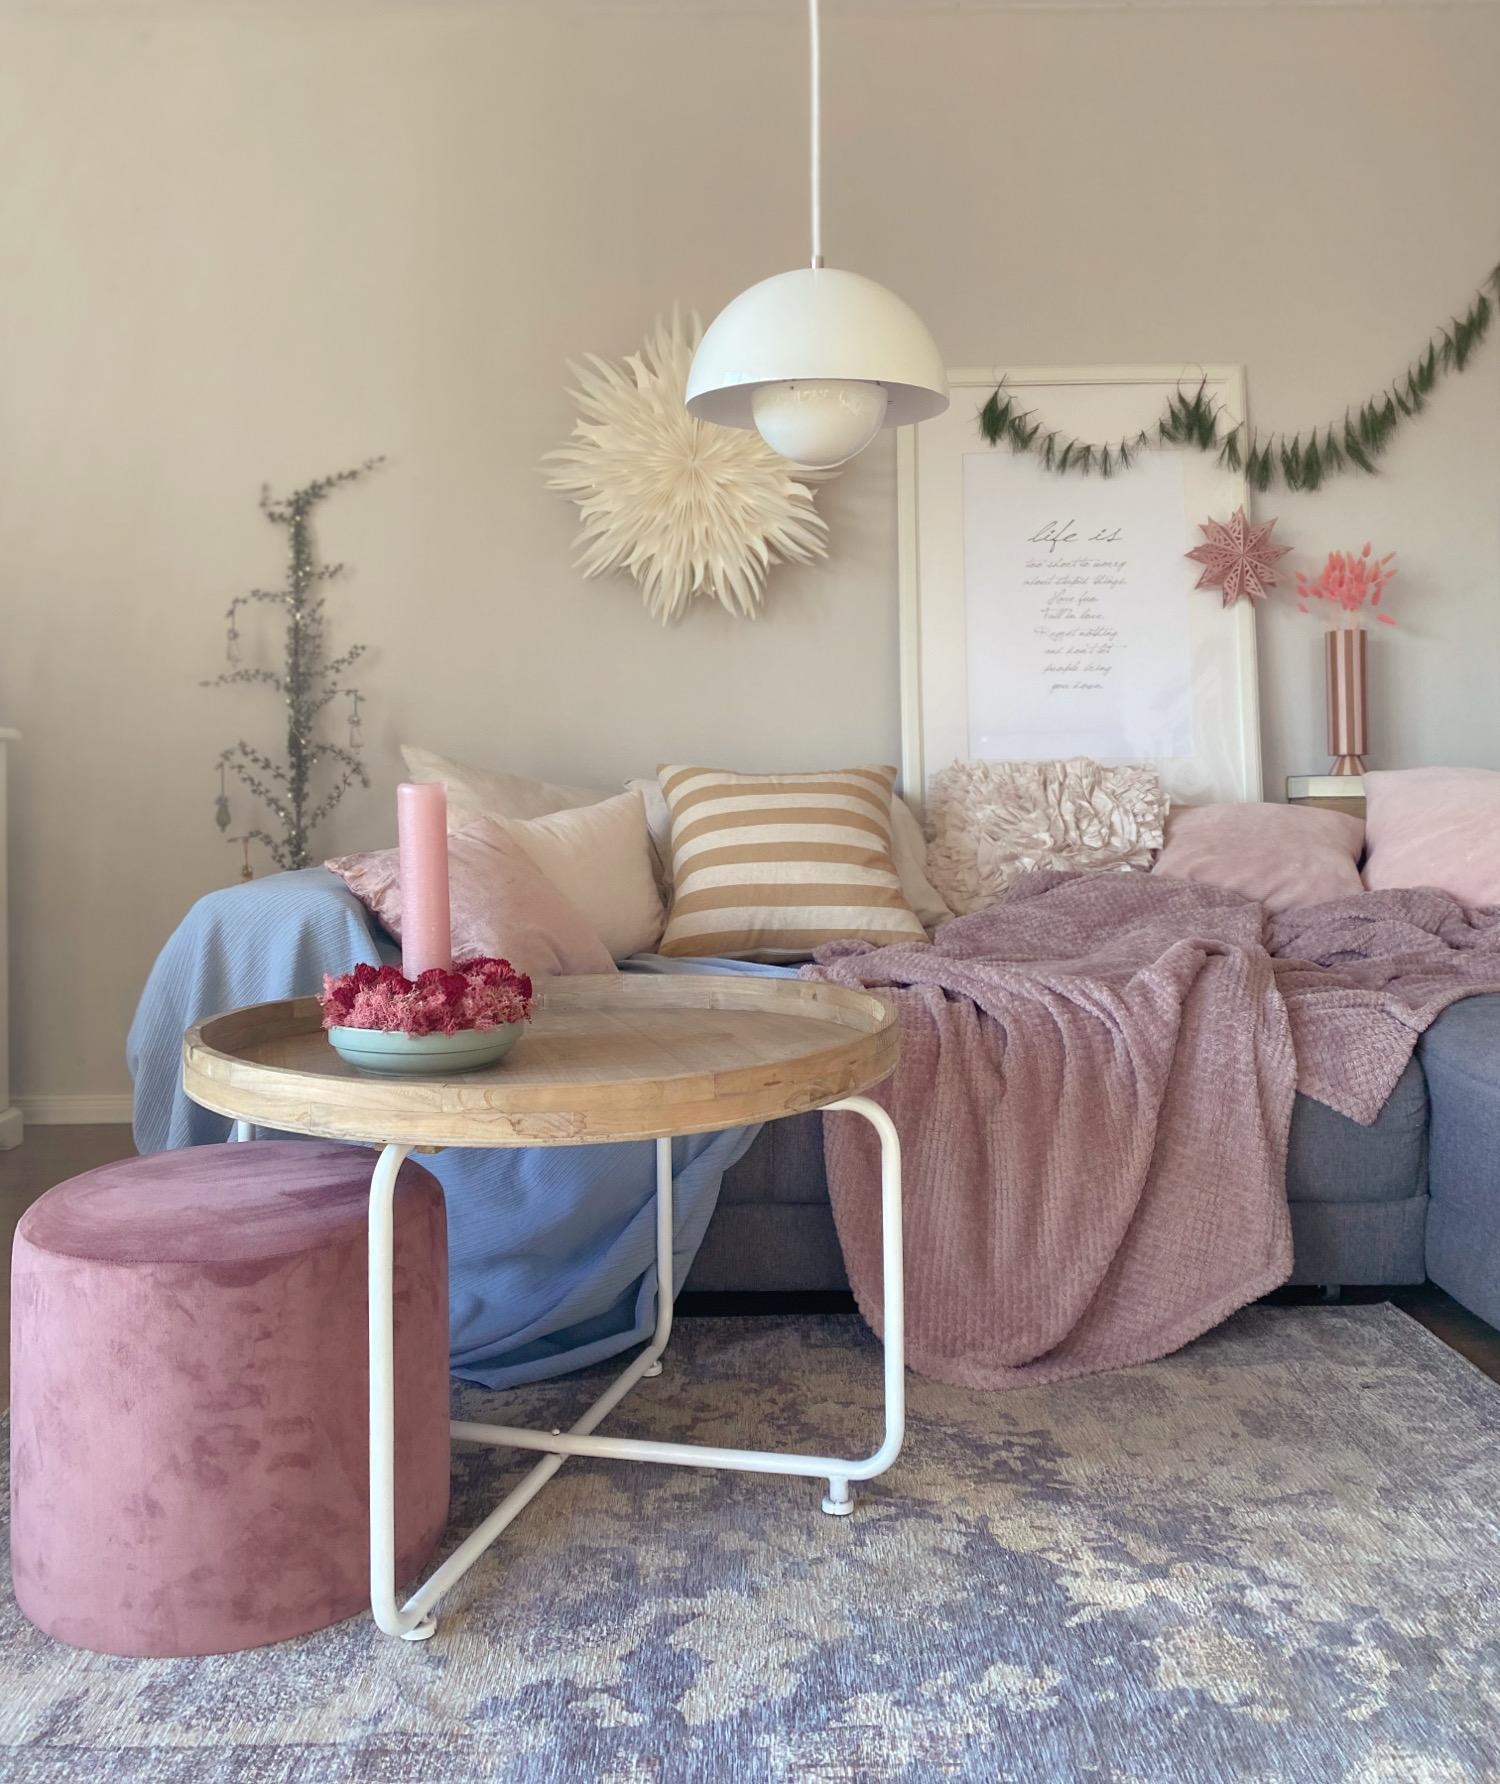 Hyggehome
#weihnachtszeit#xmasdecor#homestyle#colourfulhome#hygge#cozylivingroom